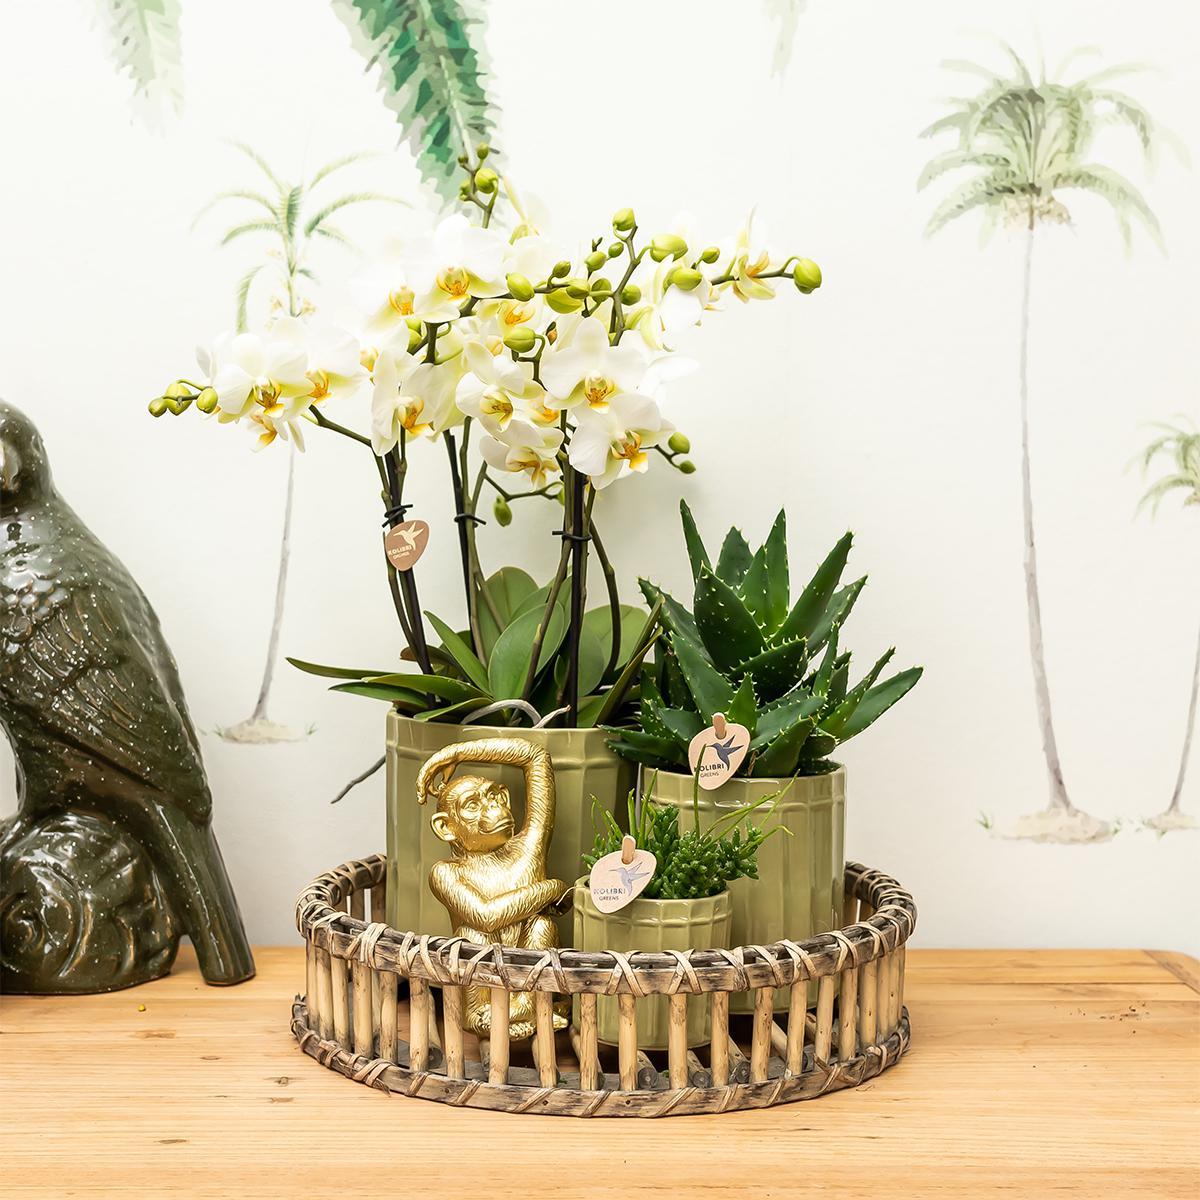 Kolibri Home | Ornament - Decoratie beeld Sitting Monkey - Gold